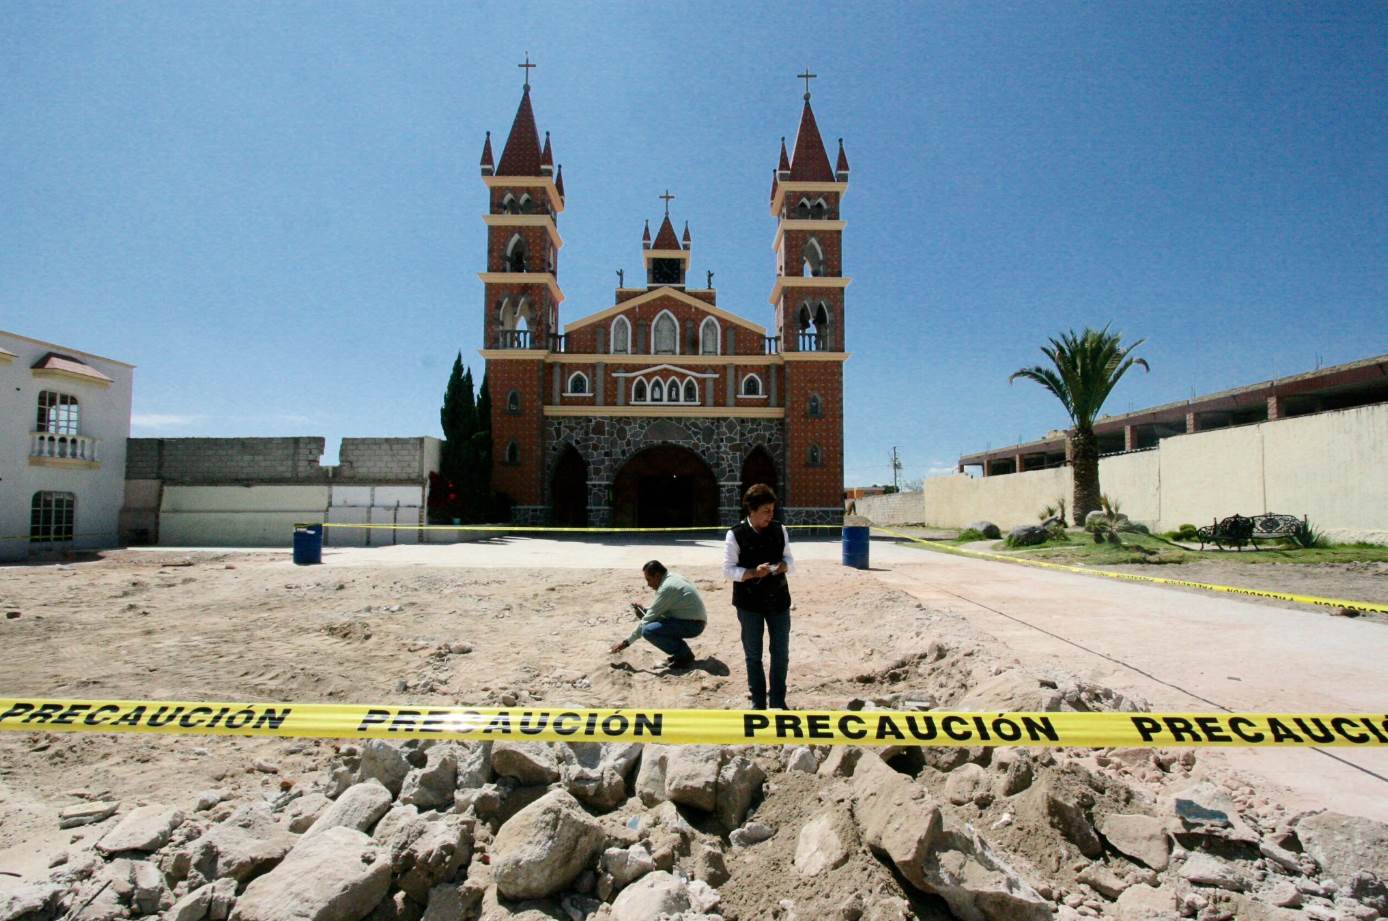 Arrasan con iglesia del siglo XVIII en Tlaxcala